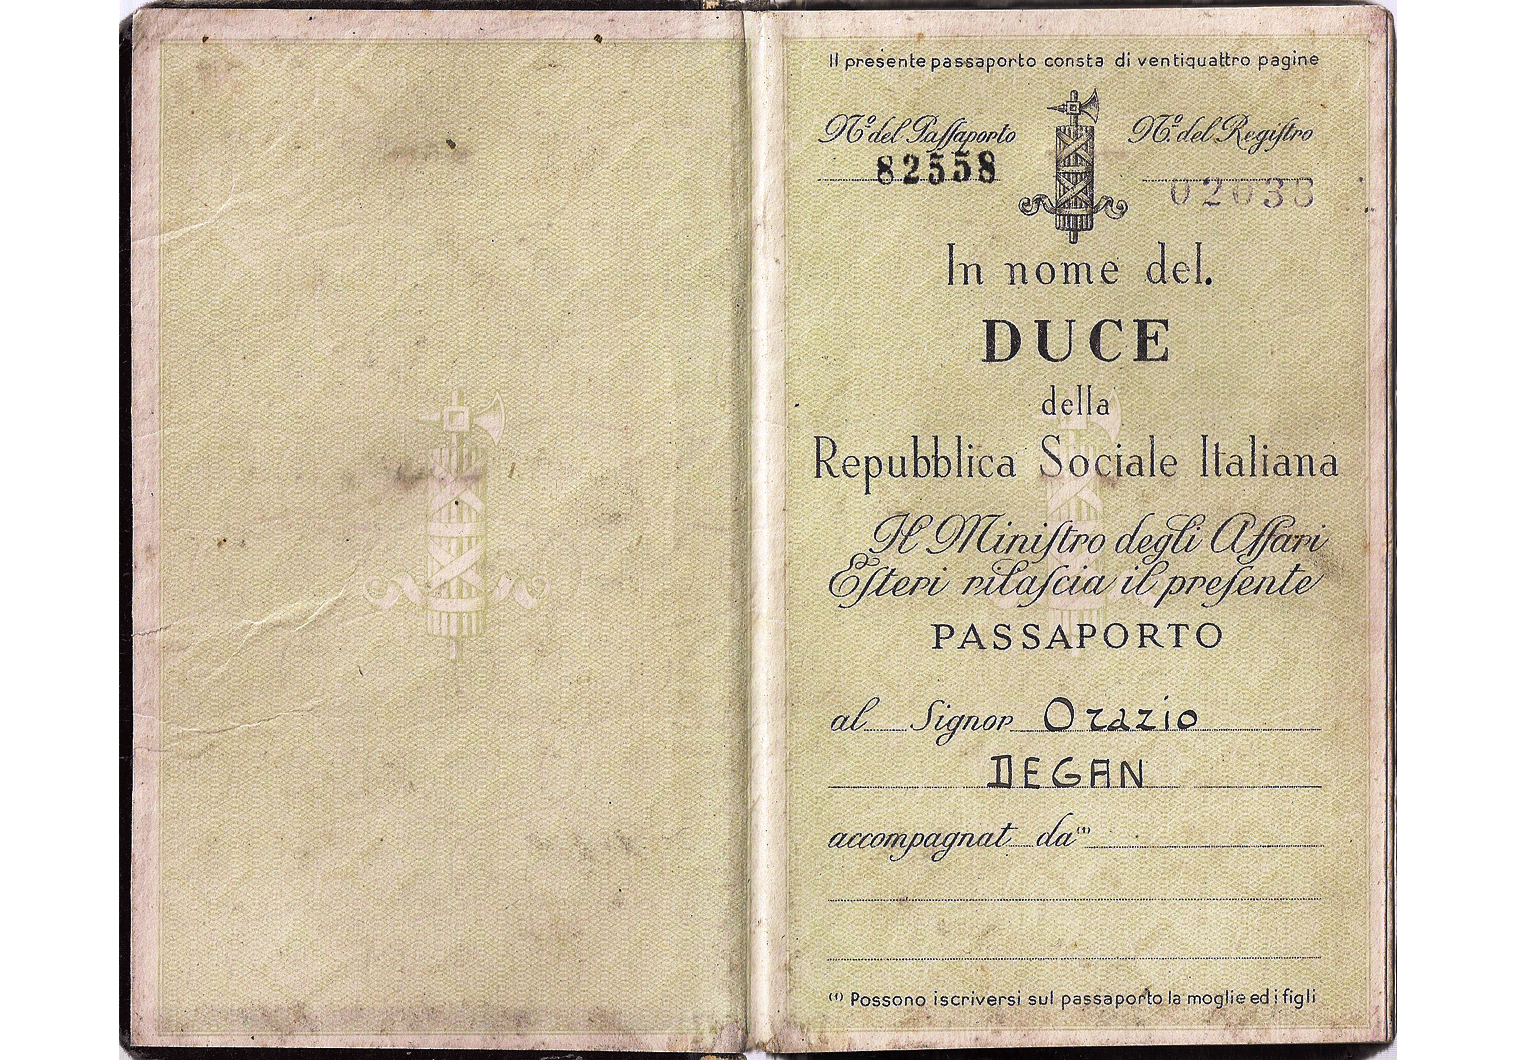 Italian Social Republic passport